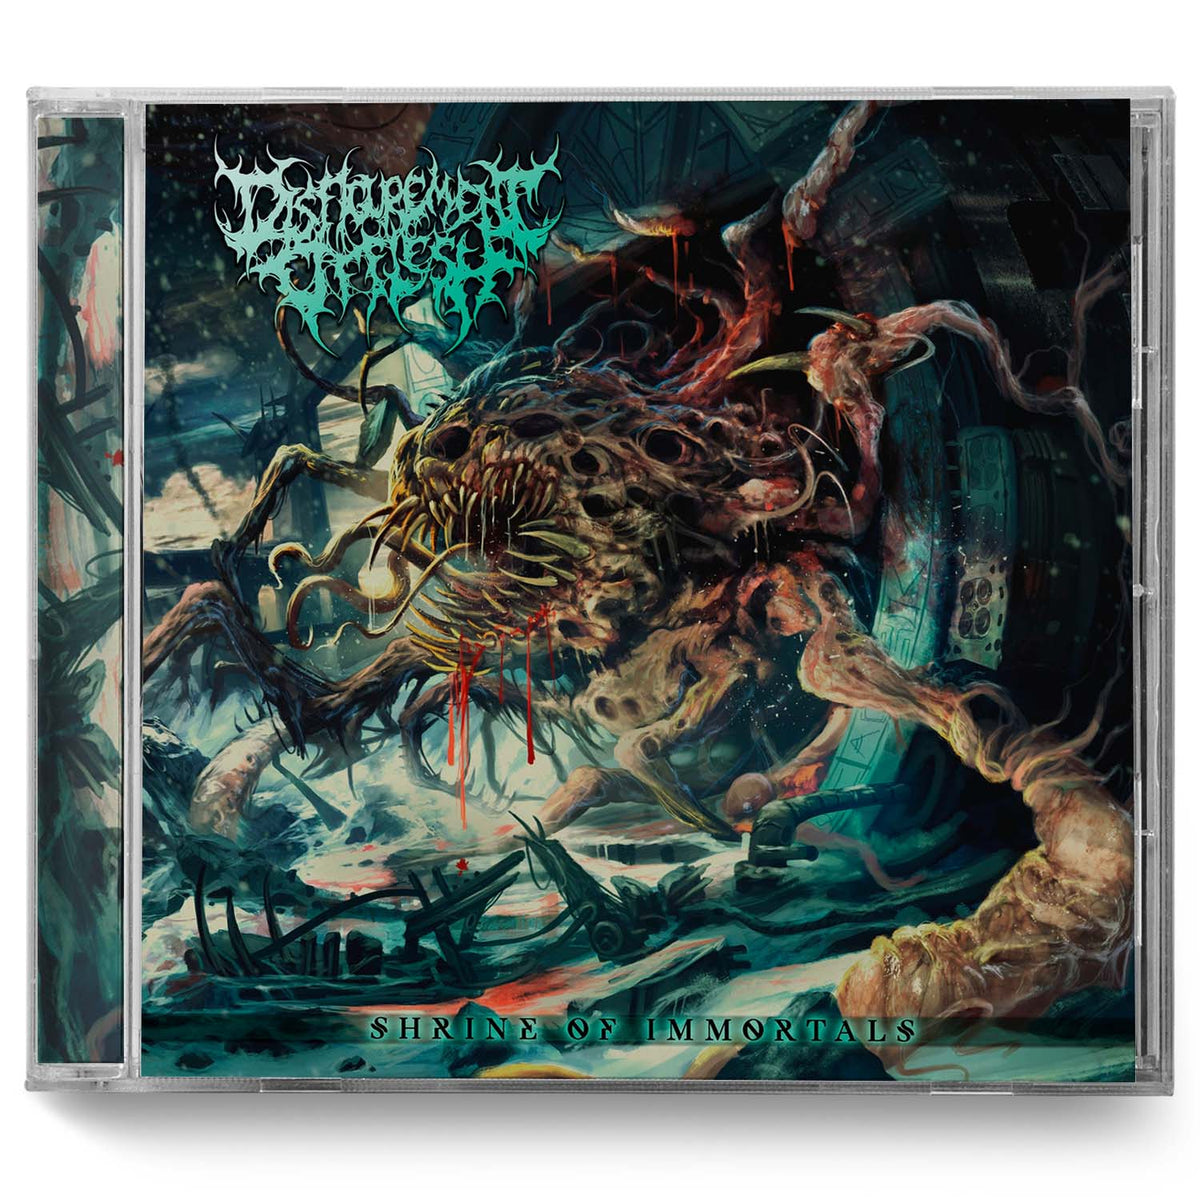 Disfigurement of Flesh "Shrine of Immortals" CD - Miasma Records